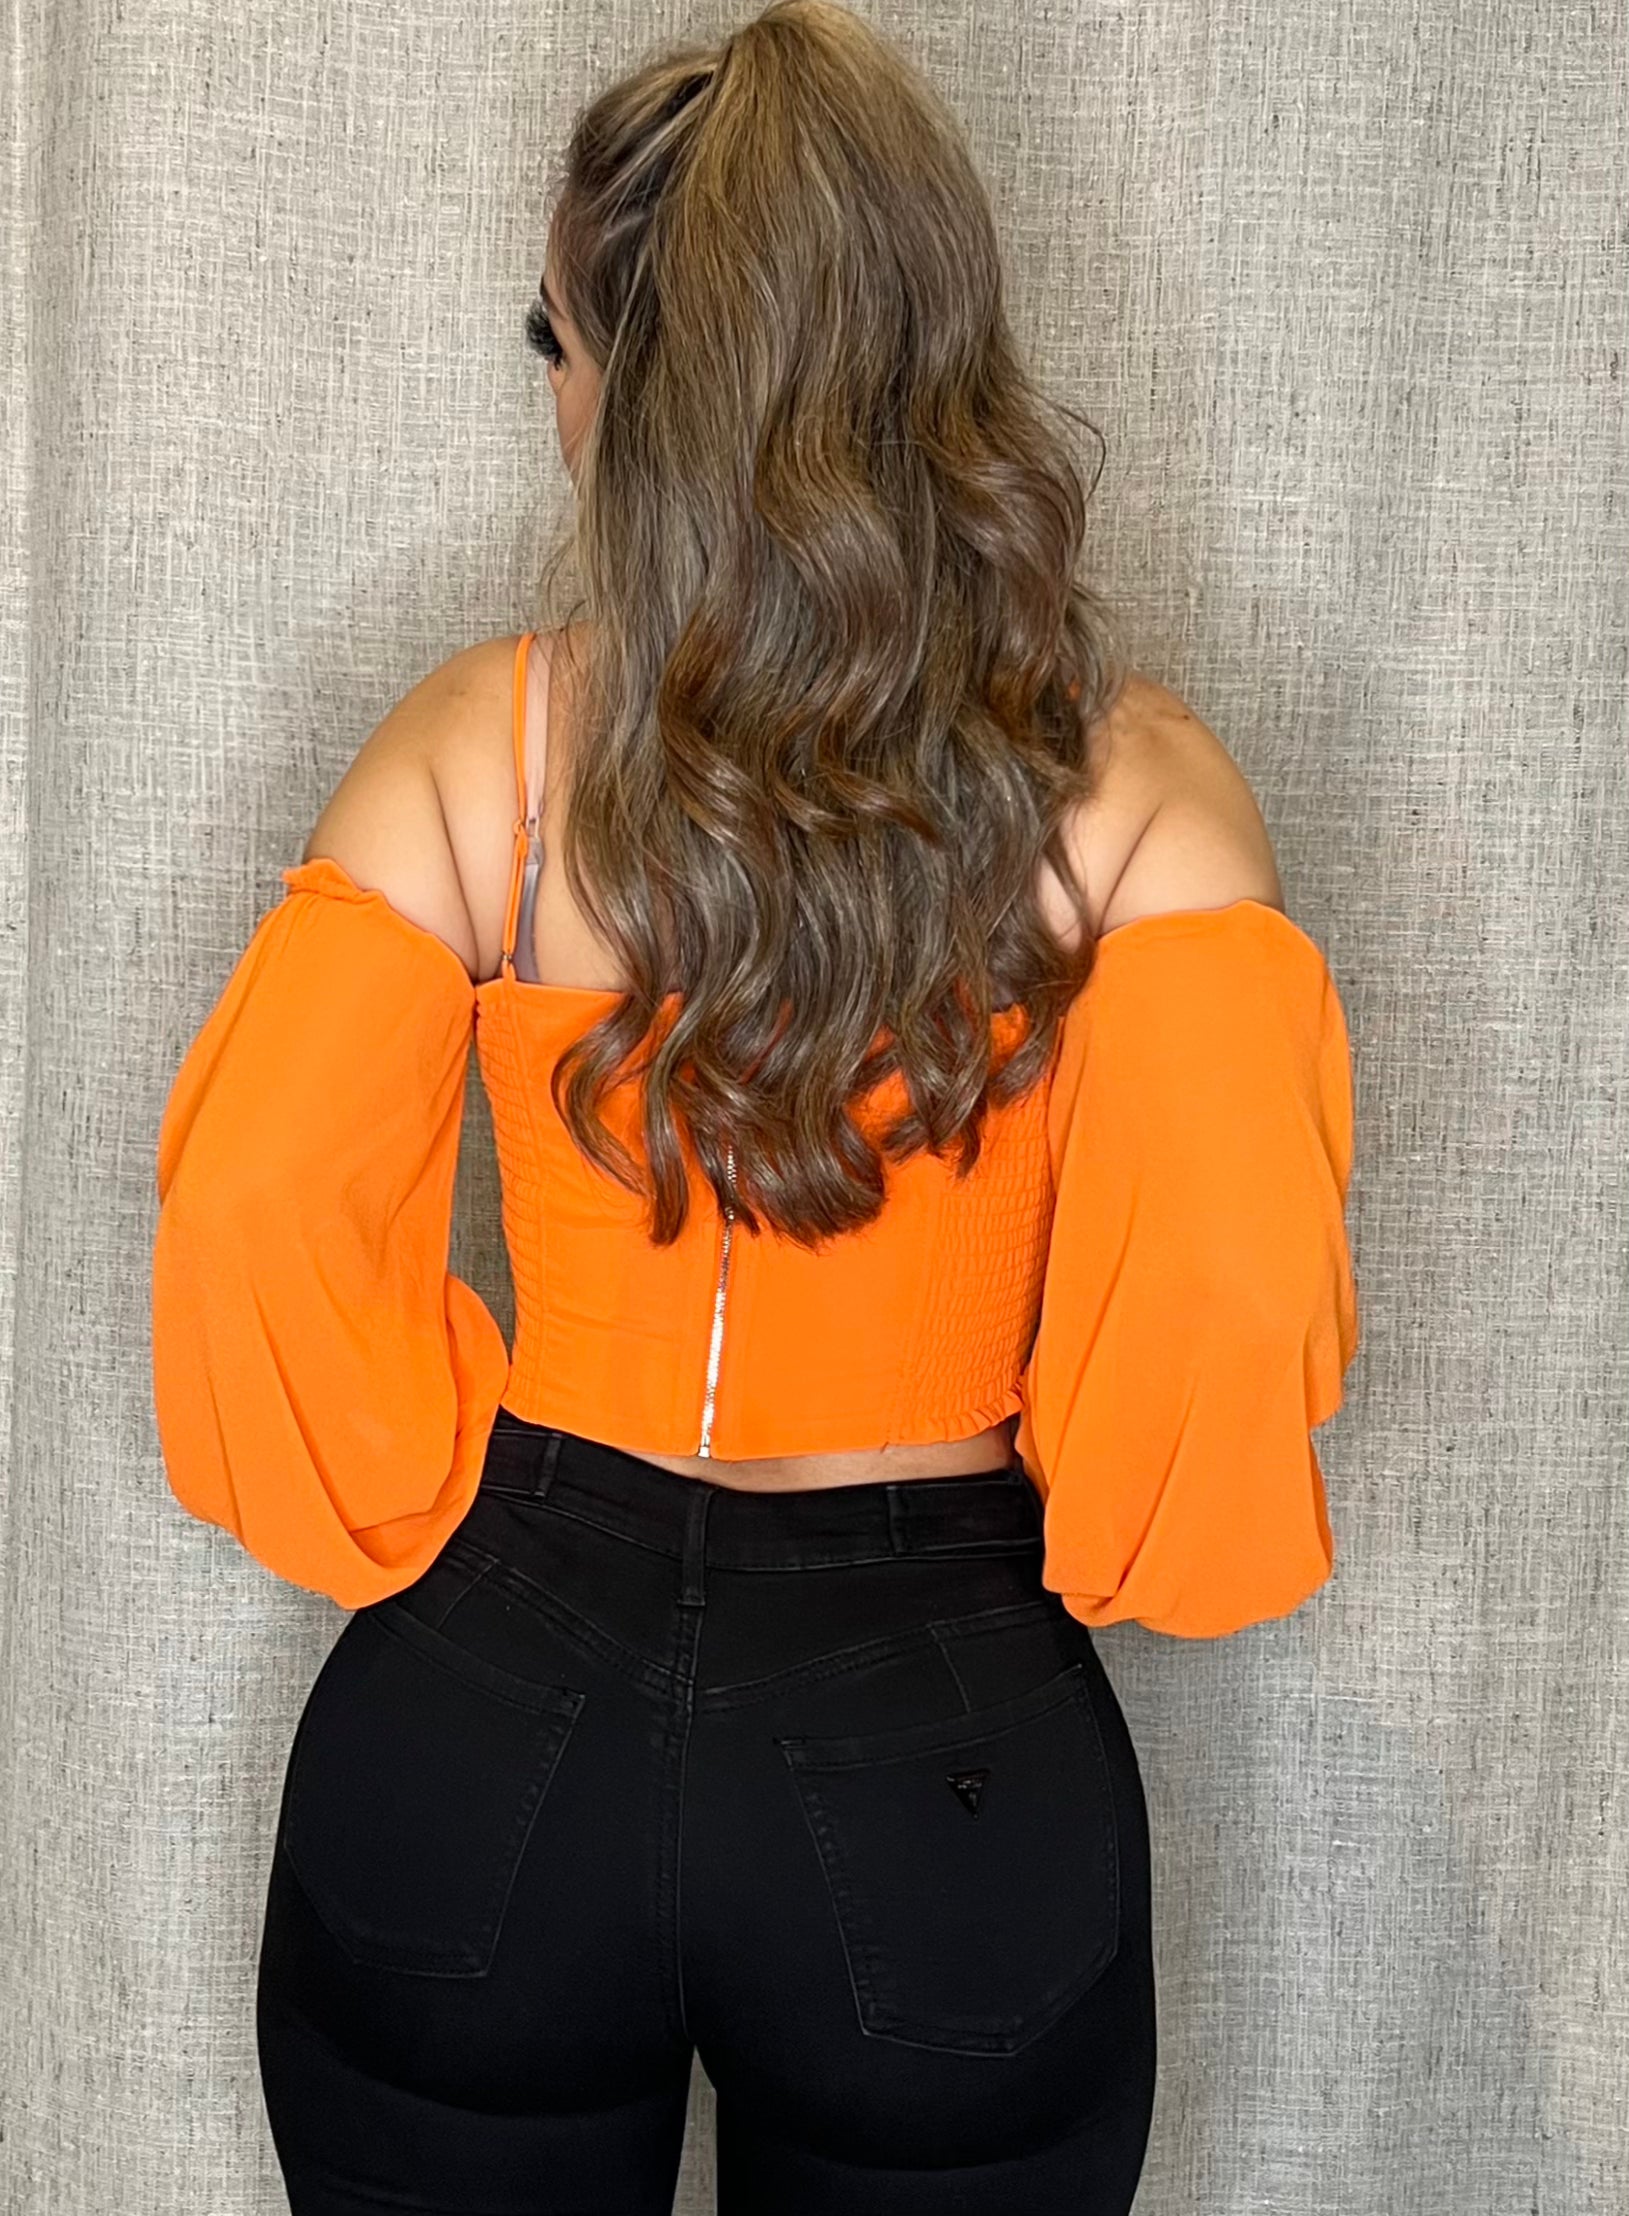 Blusa naranja corset LC – selfie boutique